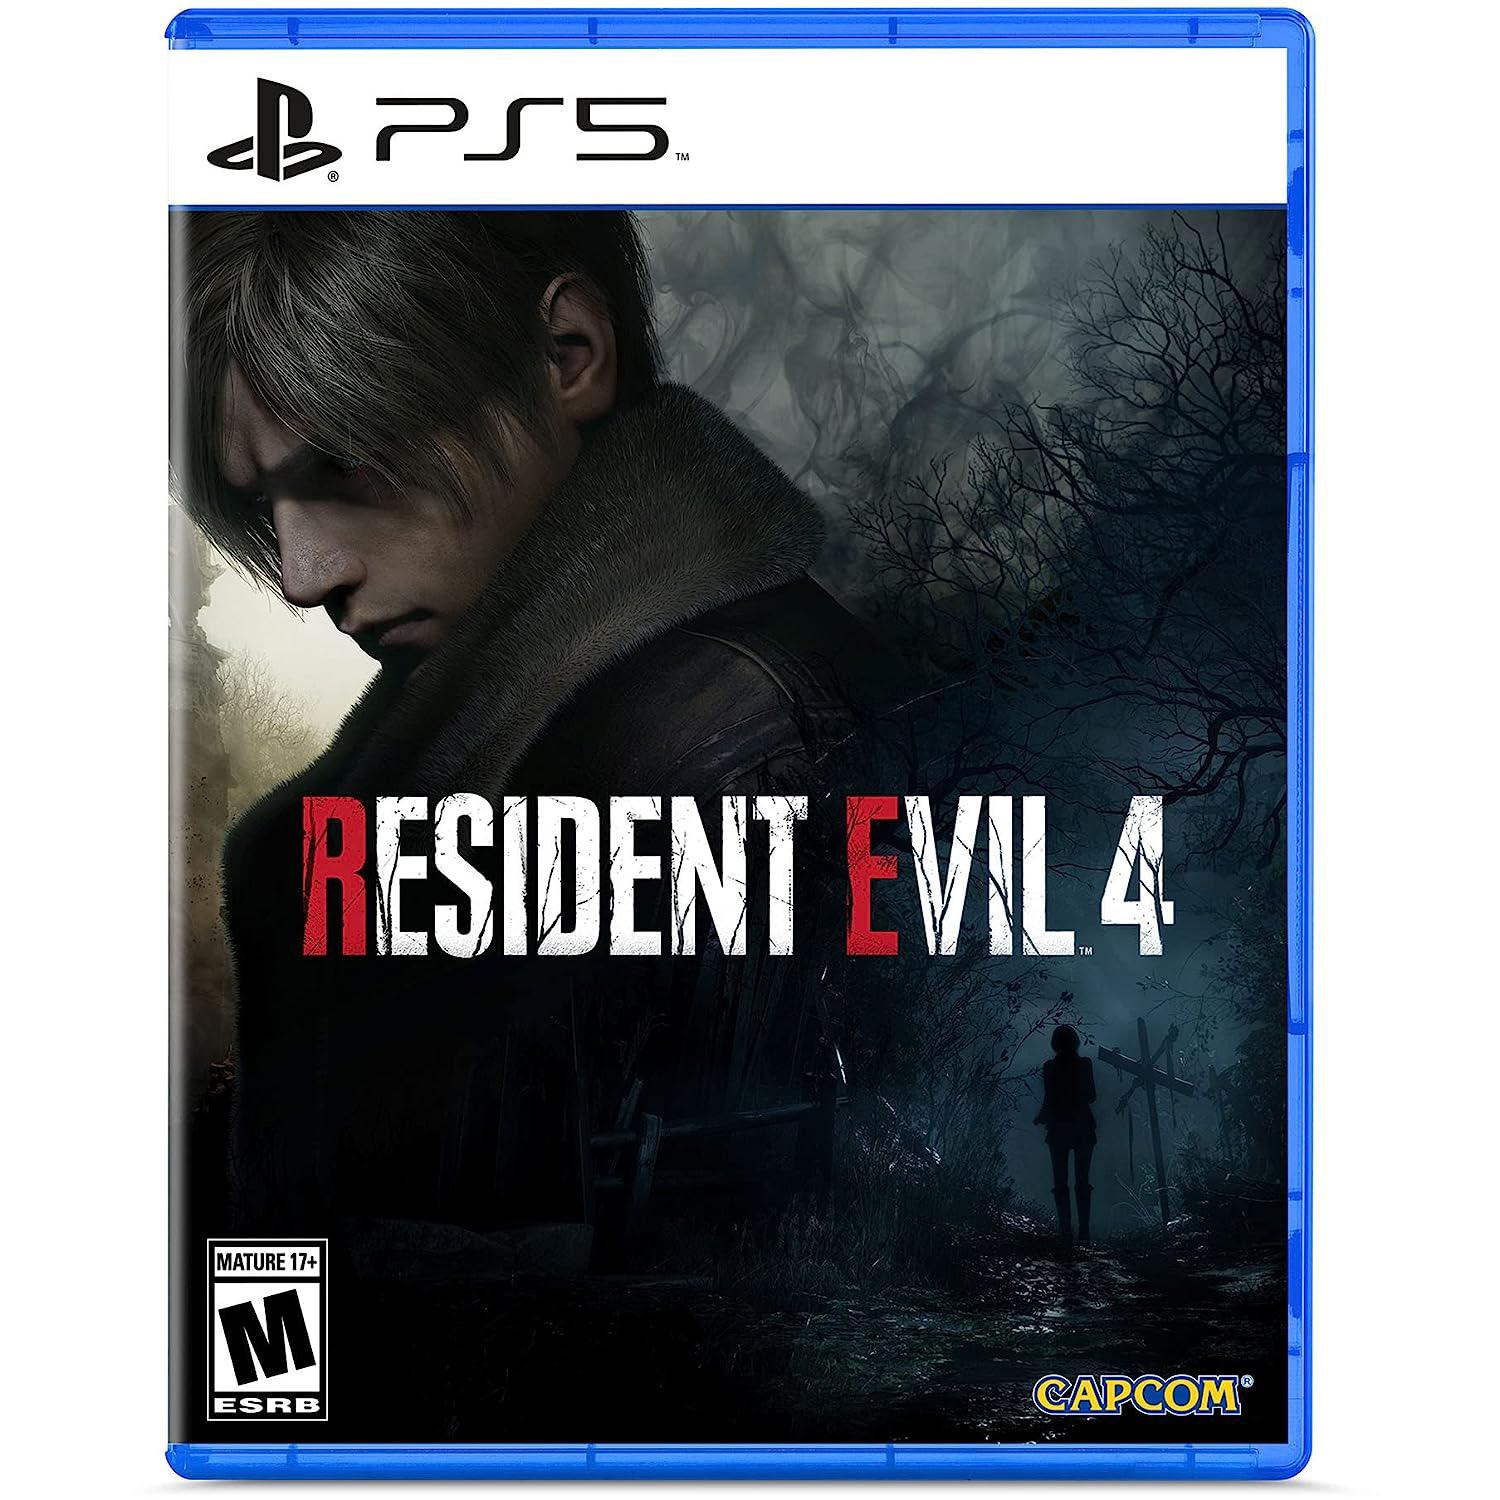 Resident Evil 4 Remake PS5 Playstation 5 for $29.99